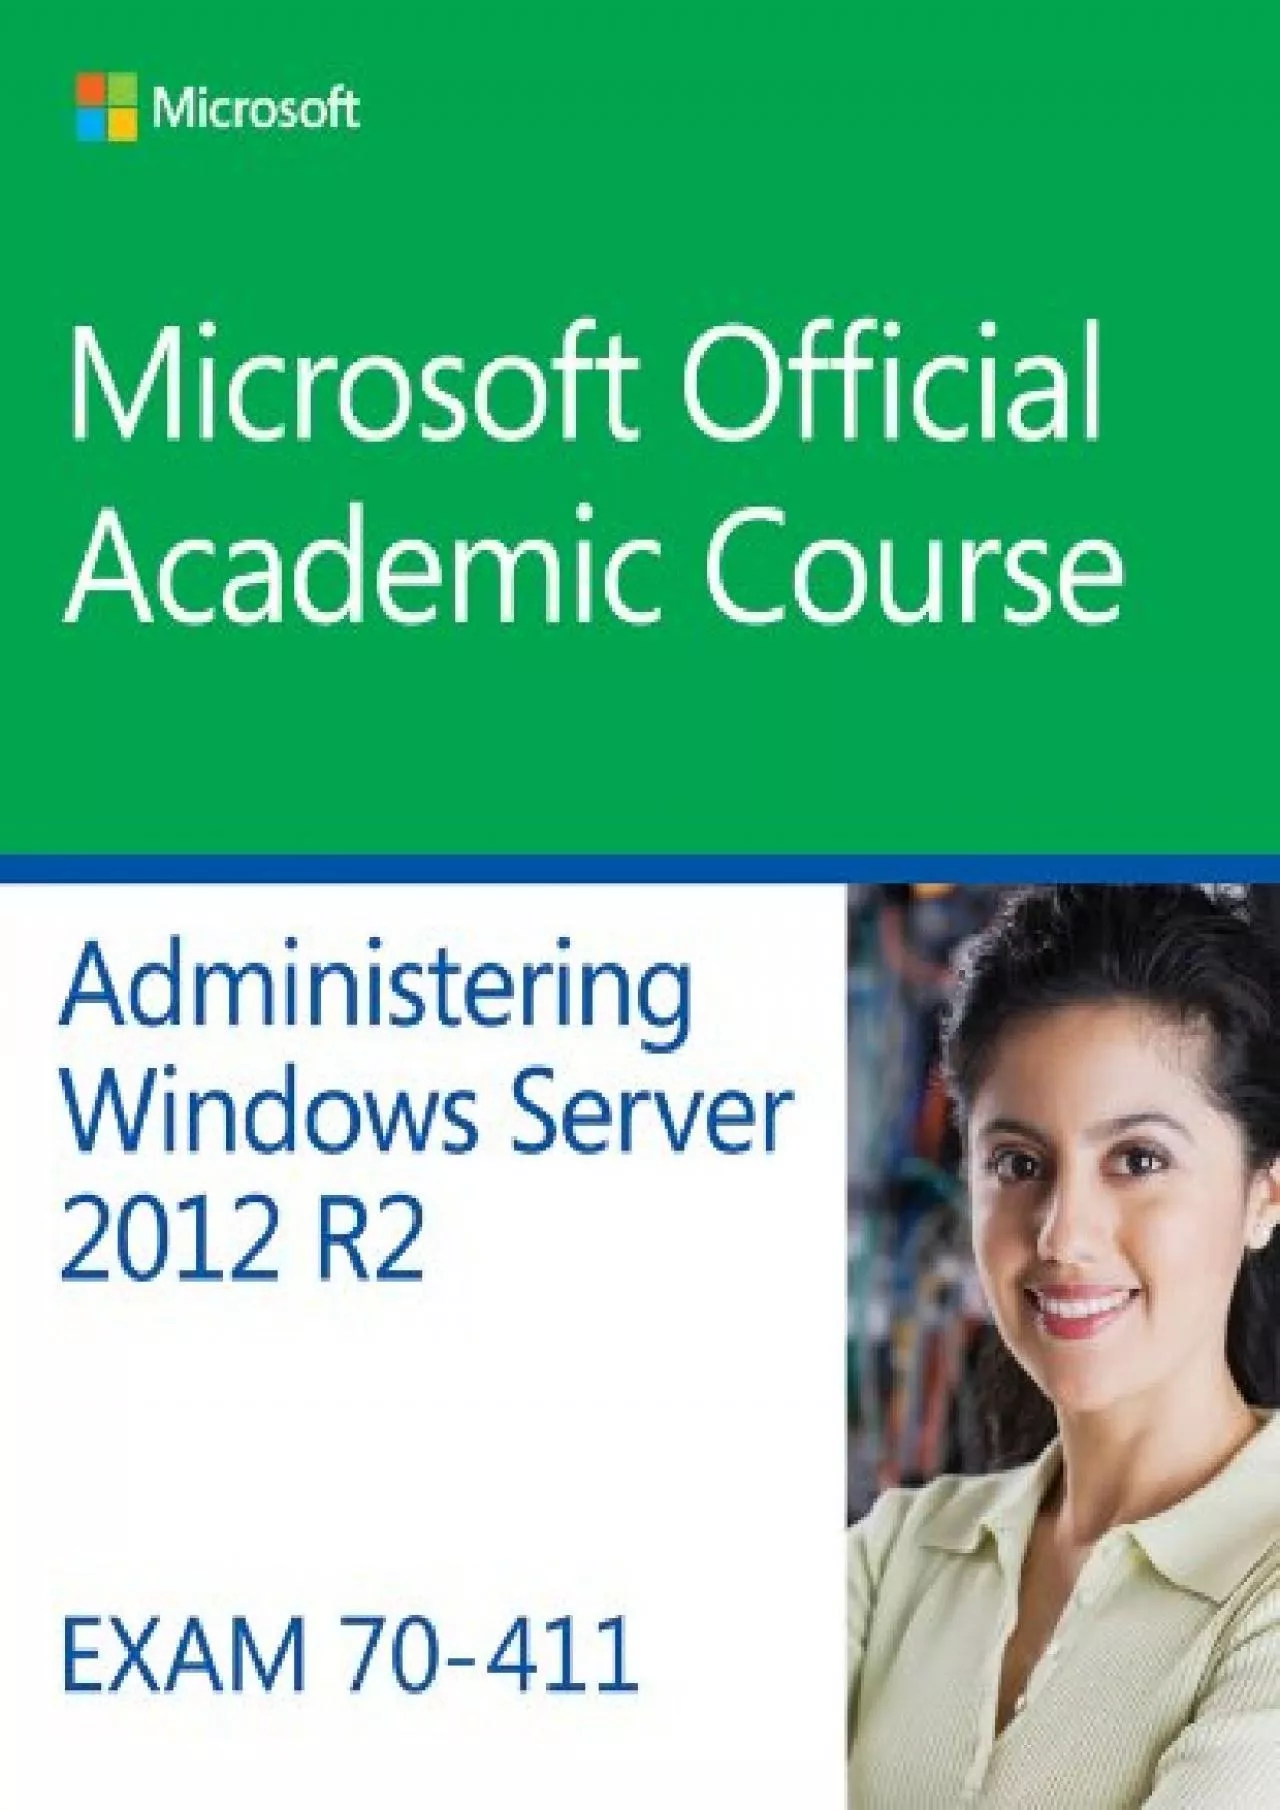 [DOWLOAD]-Administering Windows Server 2012 R2: Exam 70-411 (Microsoft Official Academic